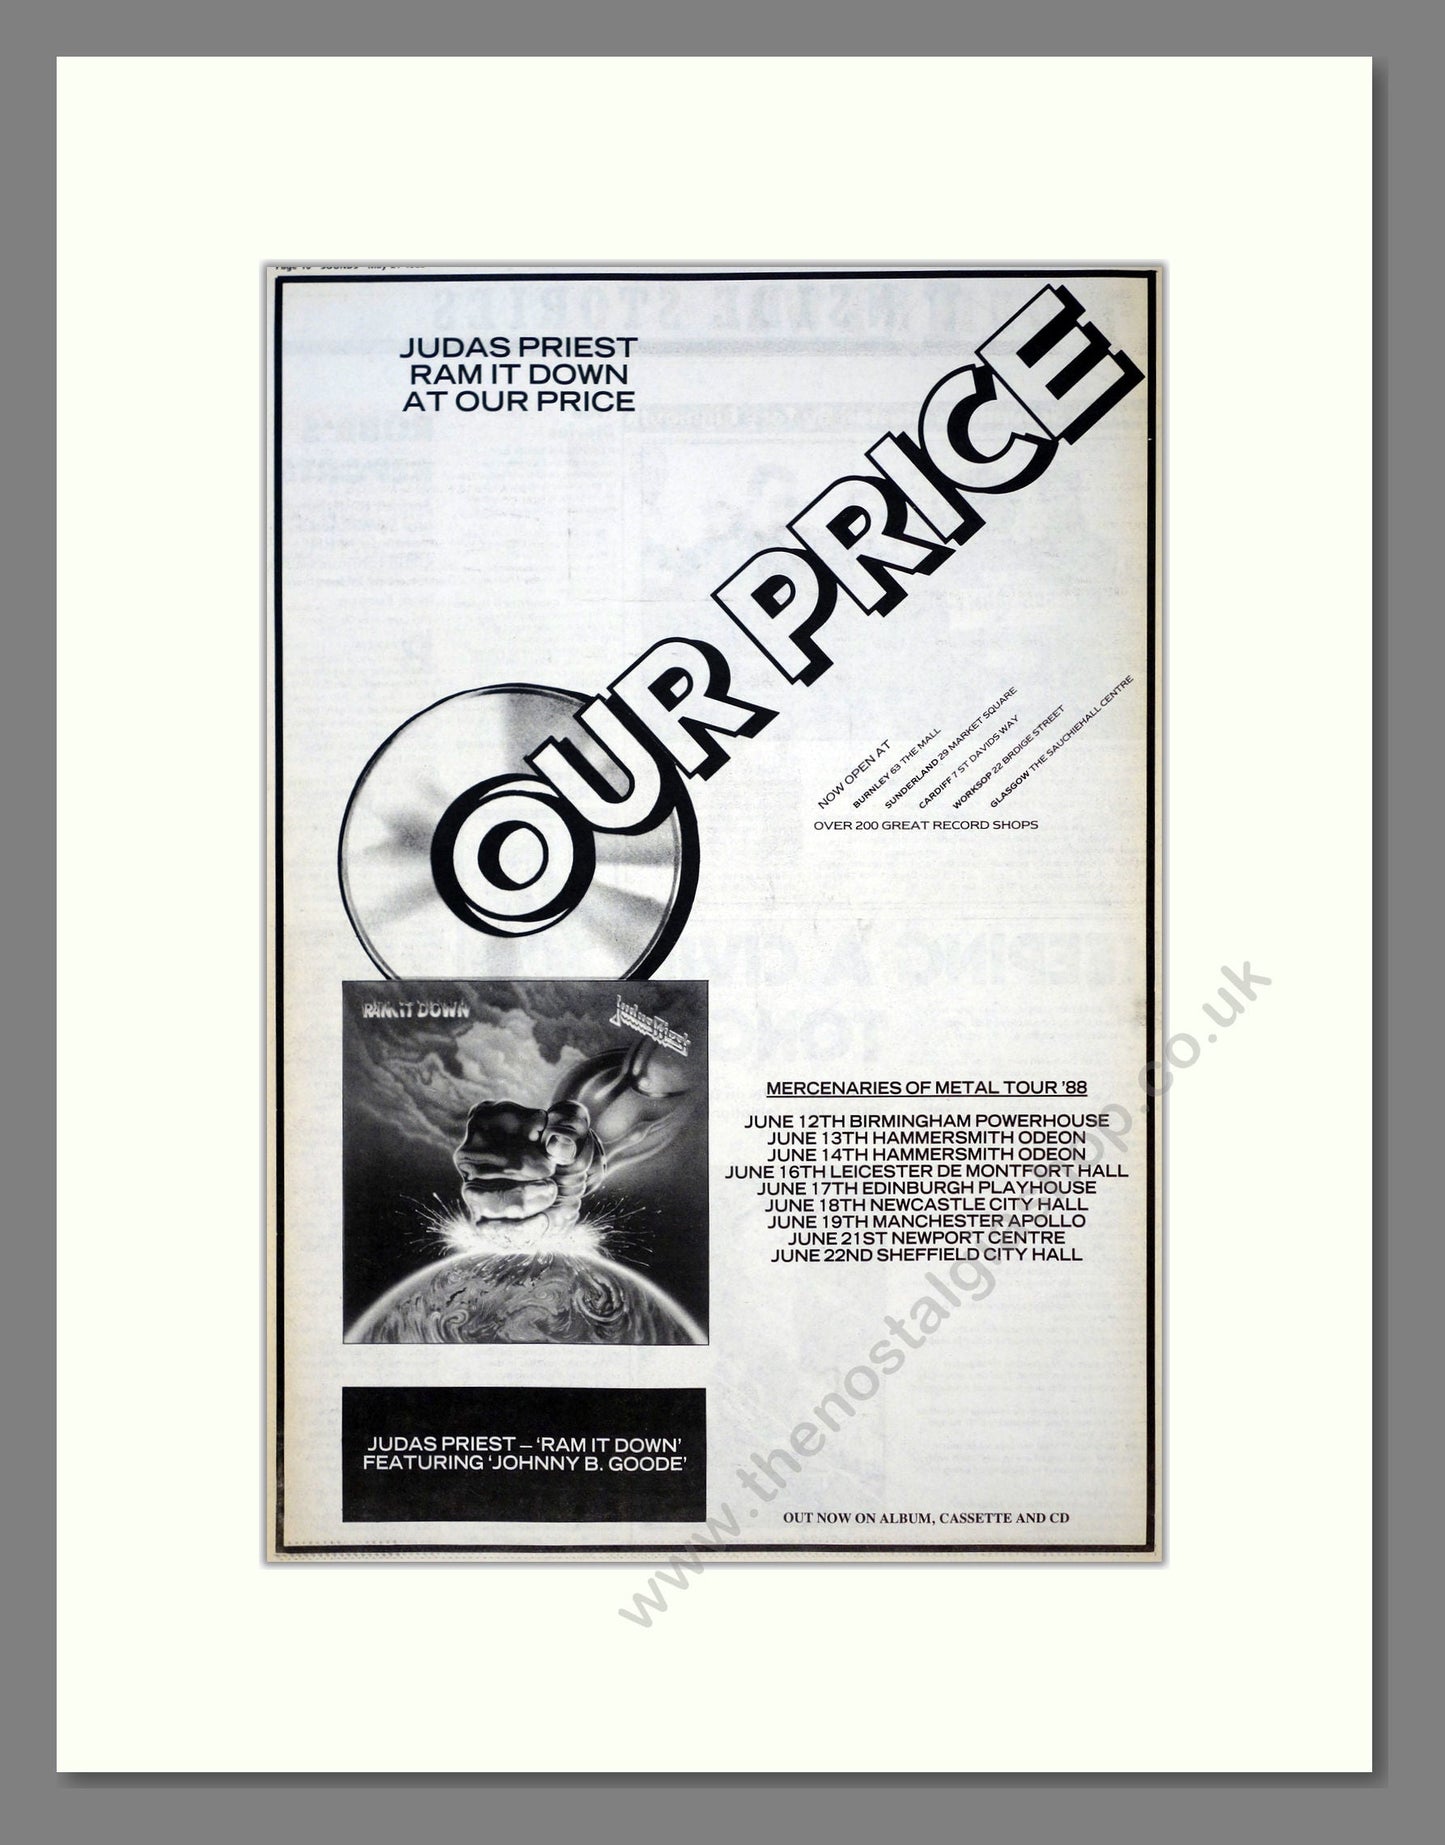 Judas Priest - Ram It Down. Vintage Advert 1988 (ref AD18486)